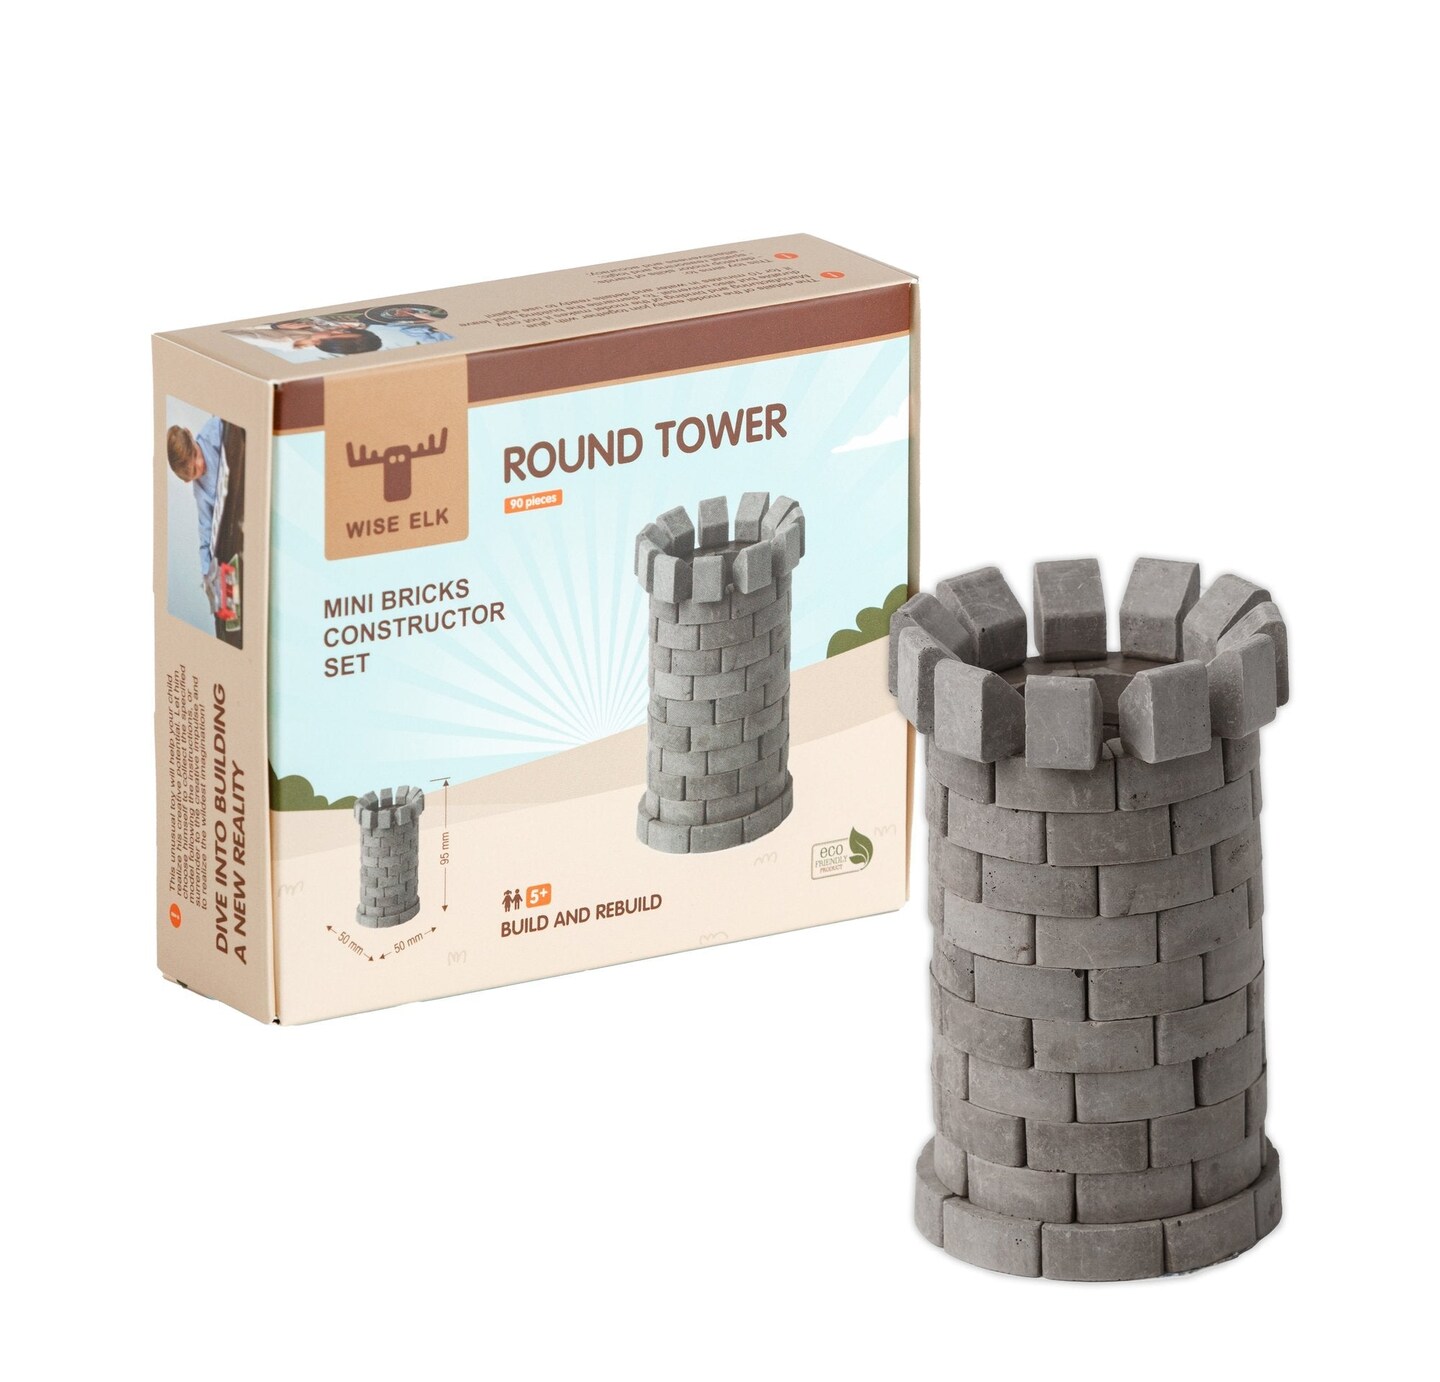 Mini Bricks Construction Set - Round Tower